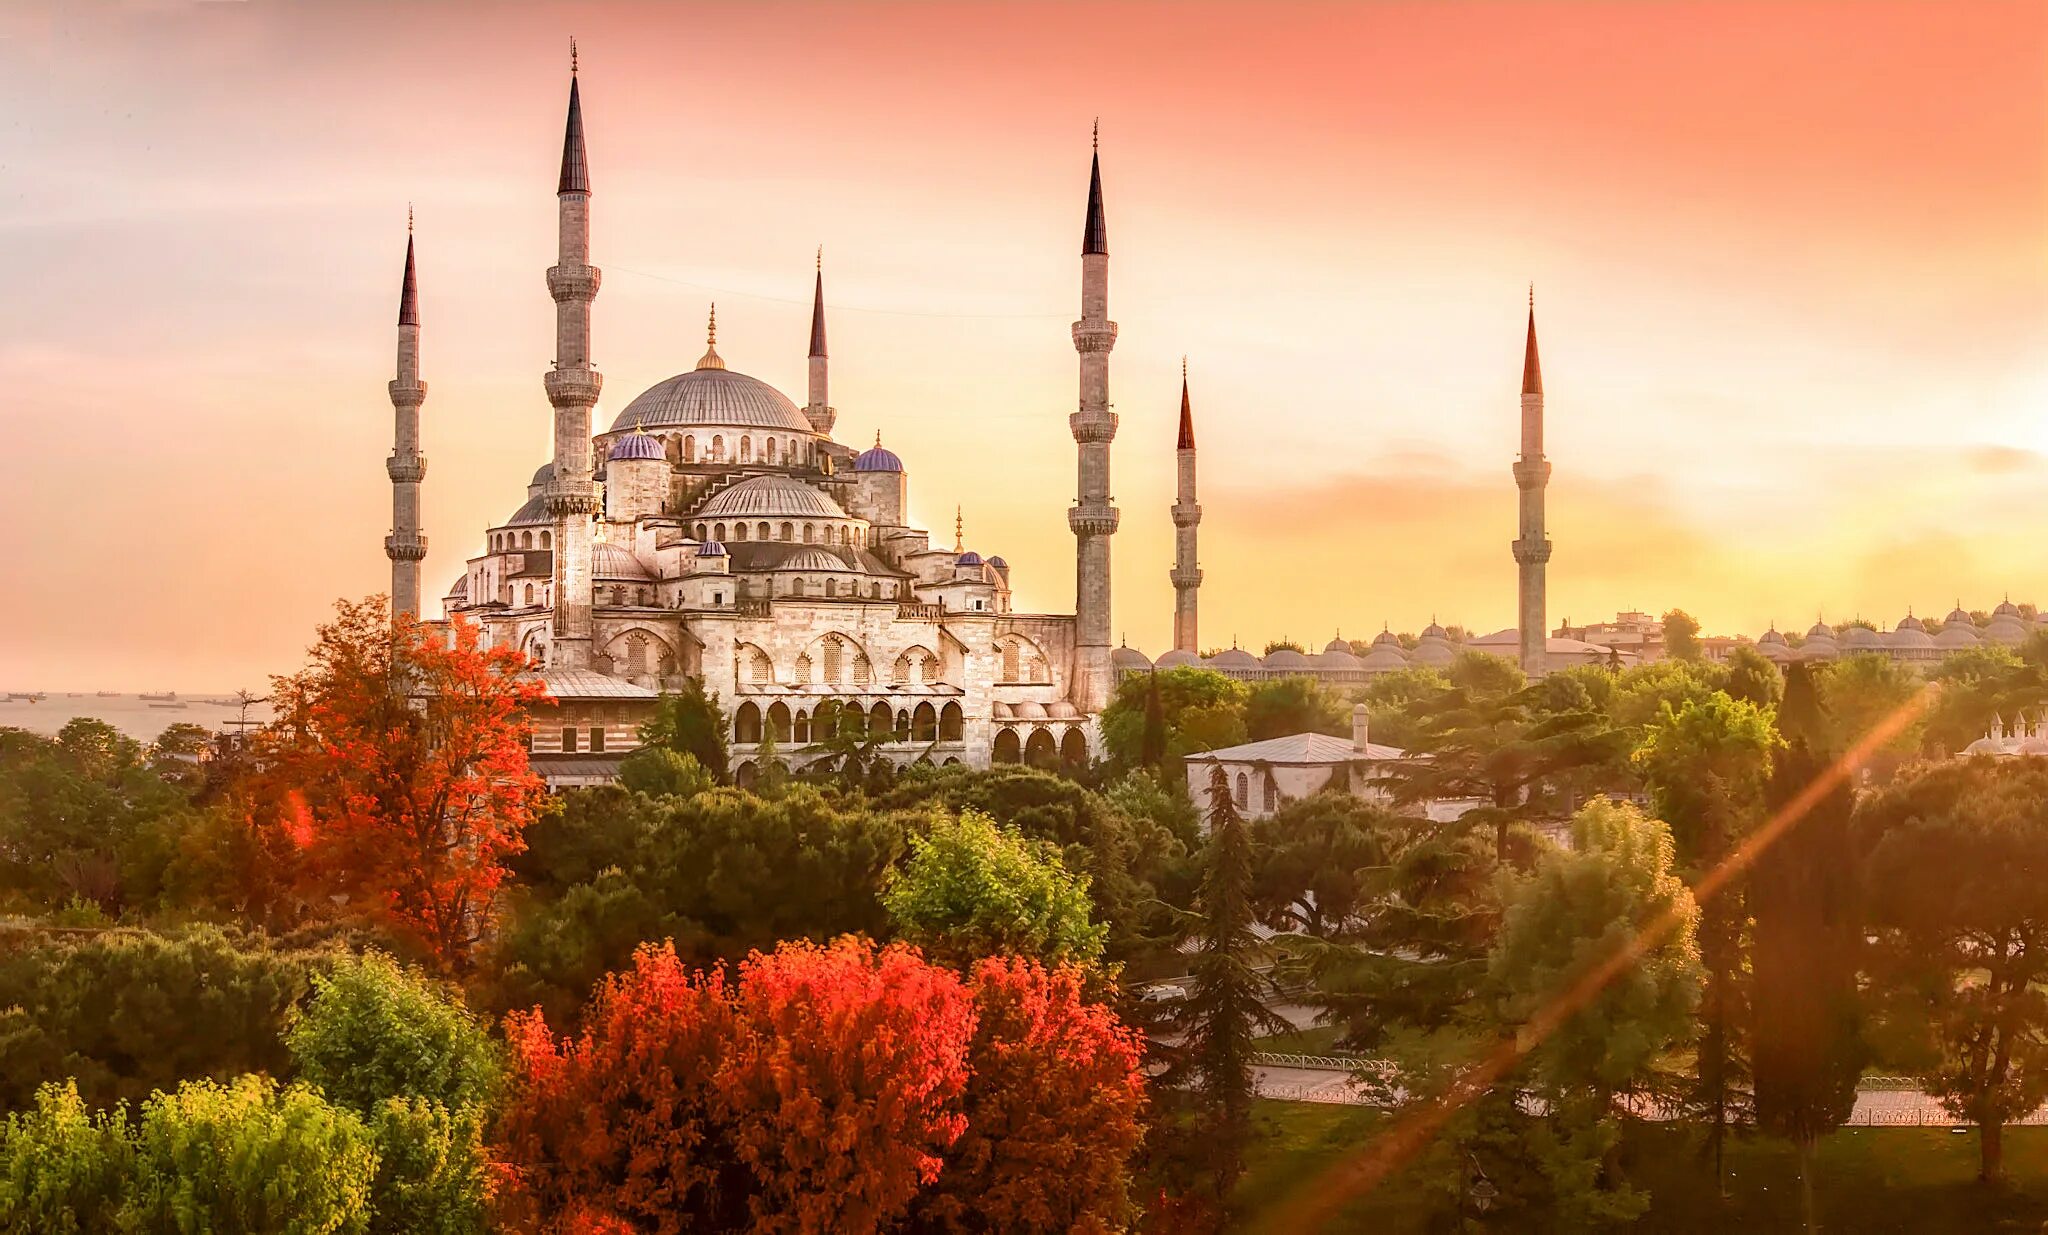 2 2 4 turkey. Голубая мечеть 6 минаретов. Blue Mosque Стамбул 2022.